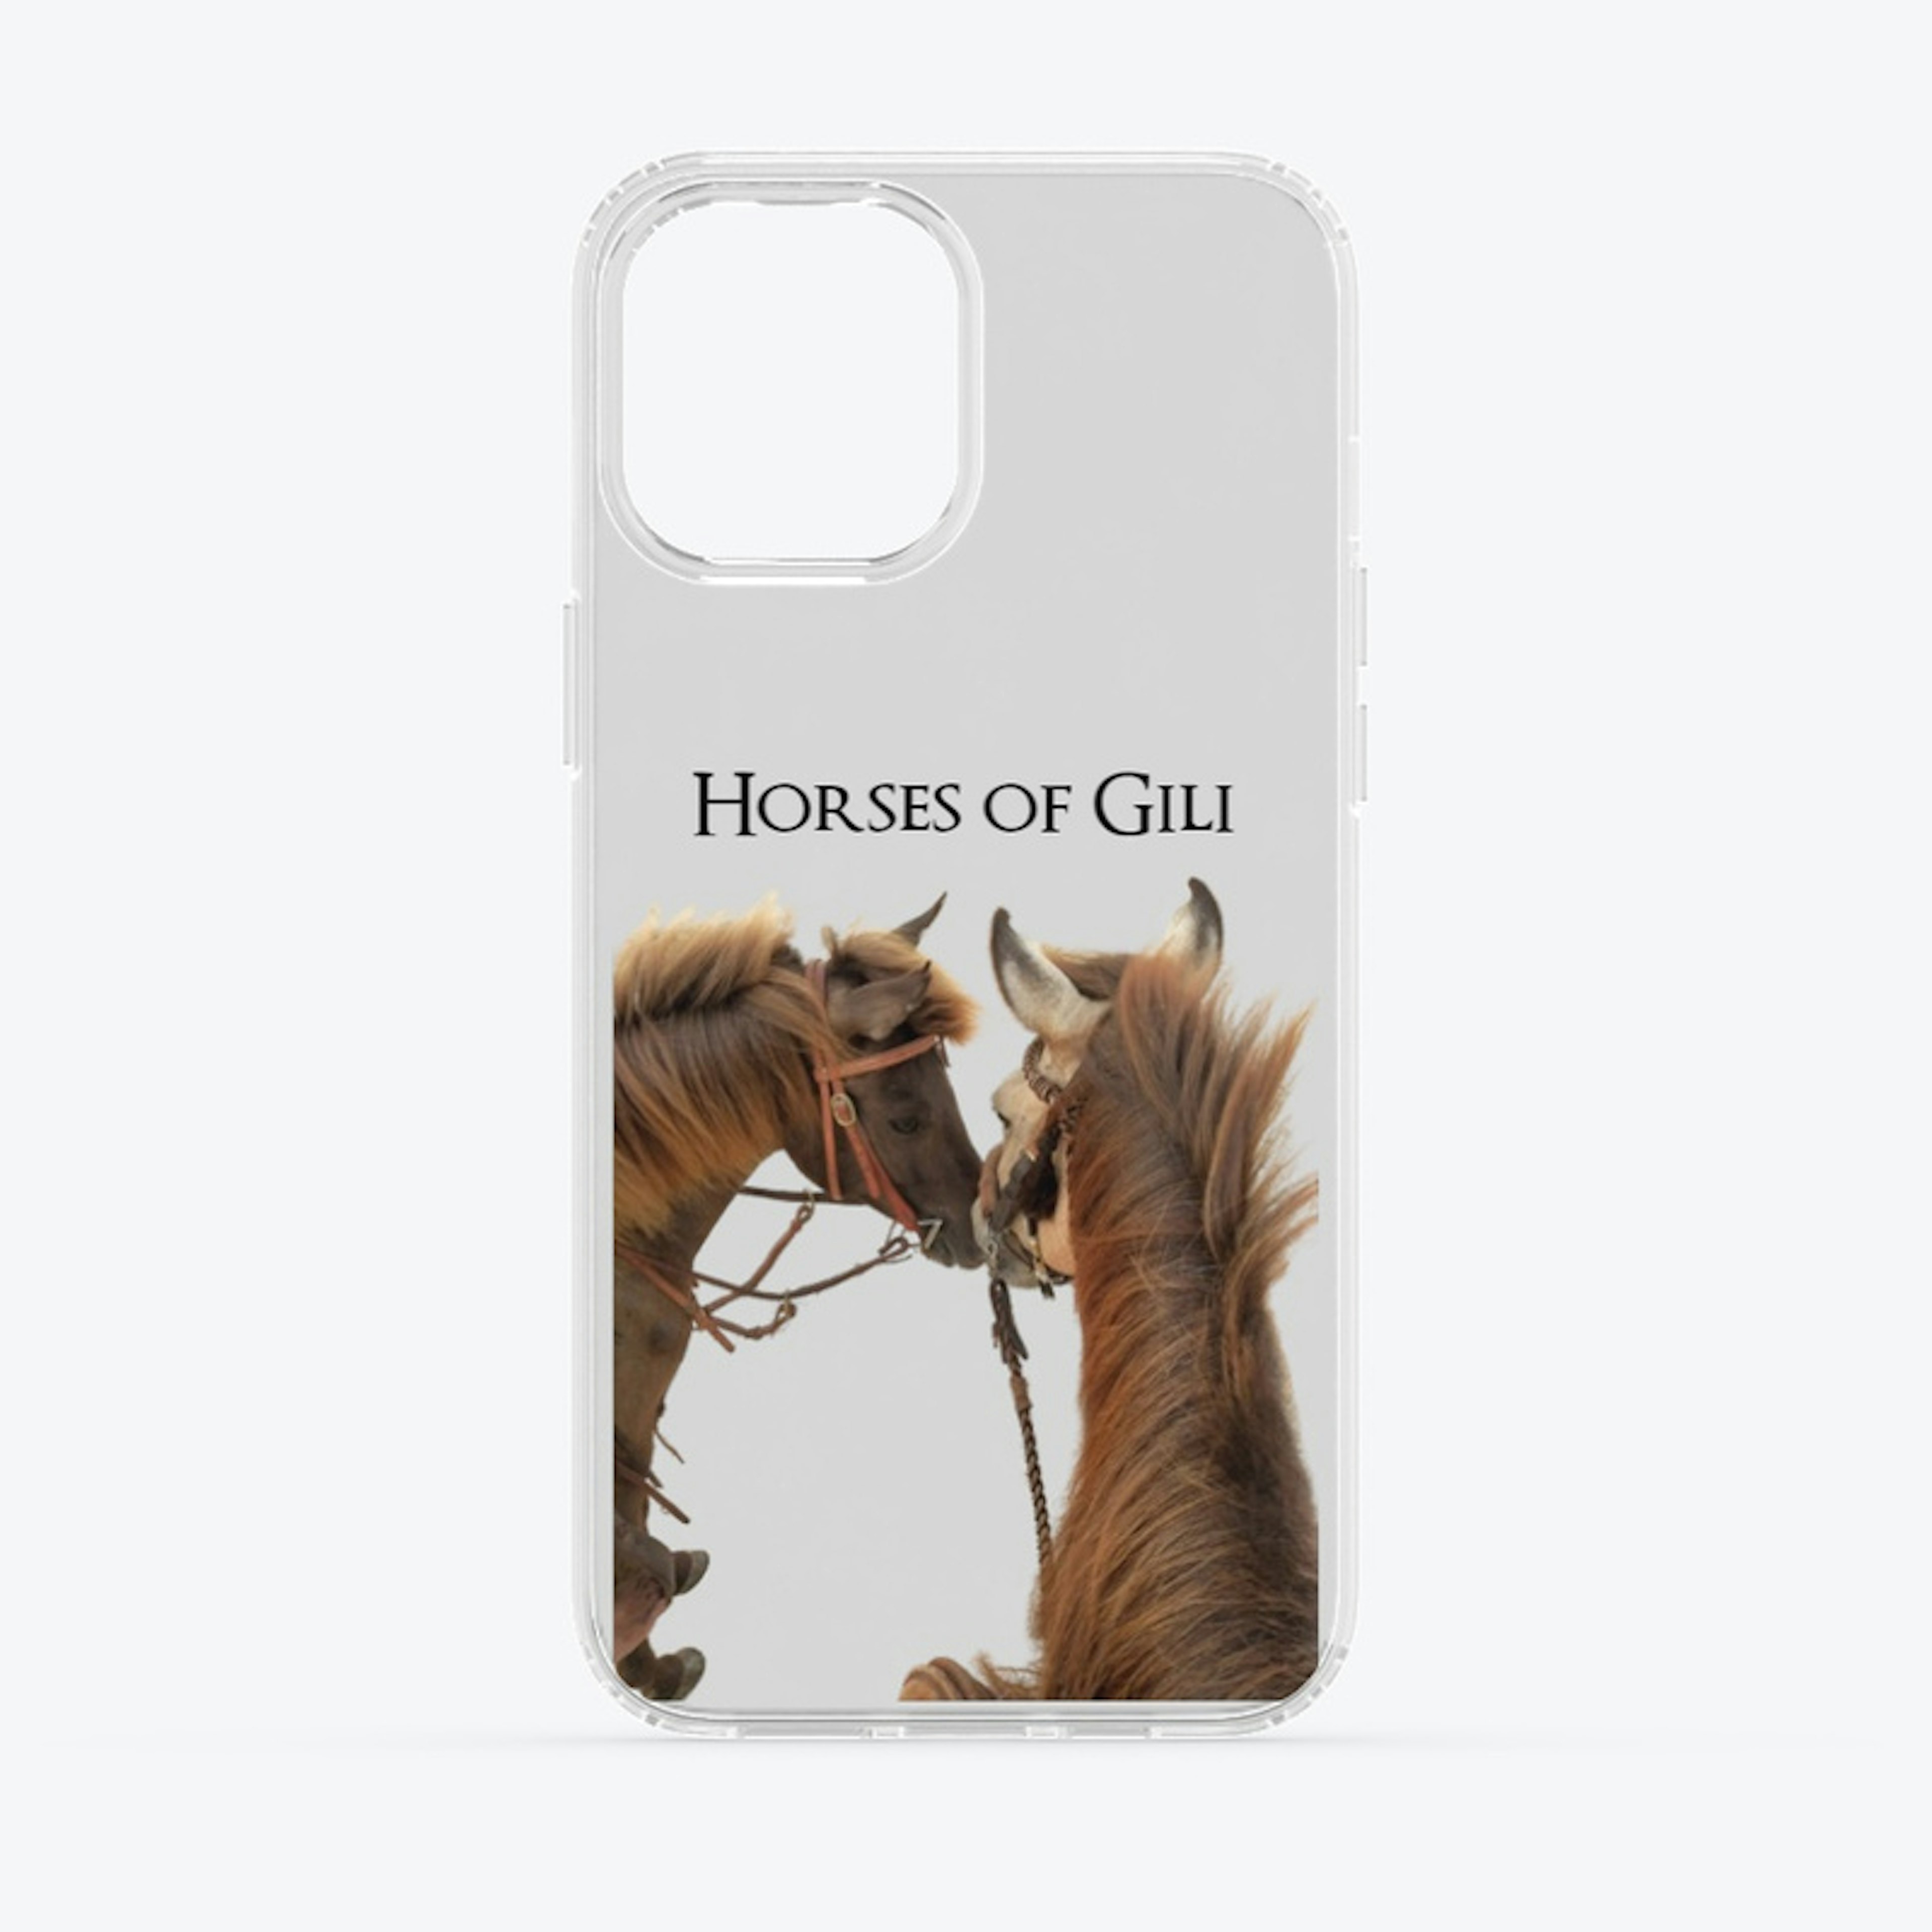 Horses of Gili phone case